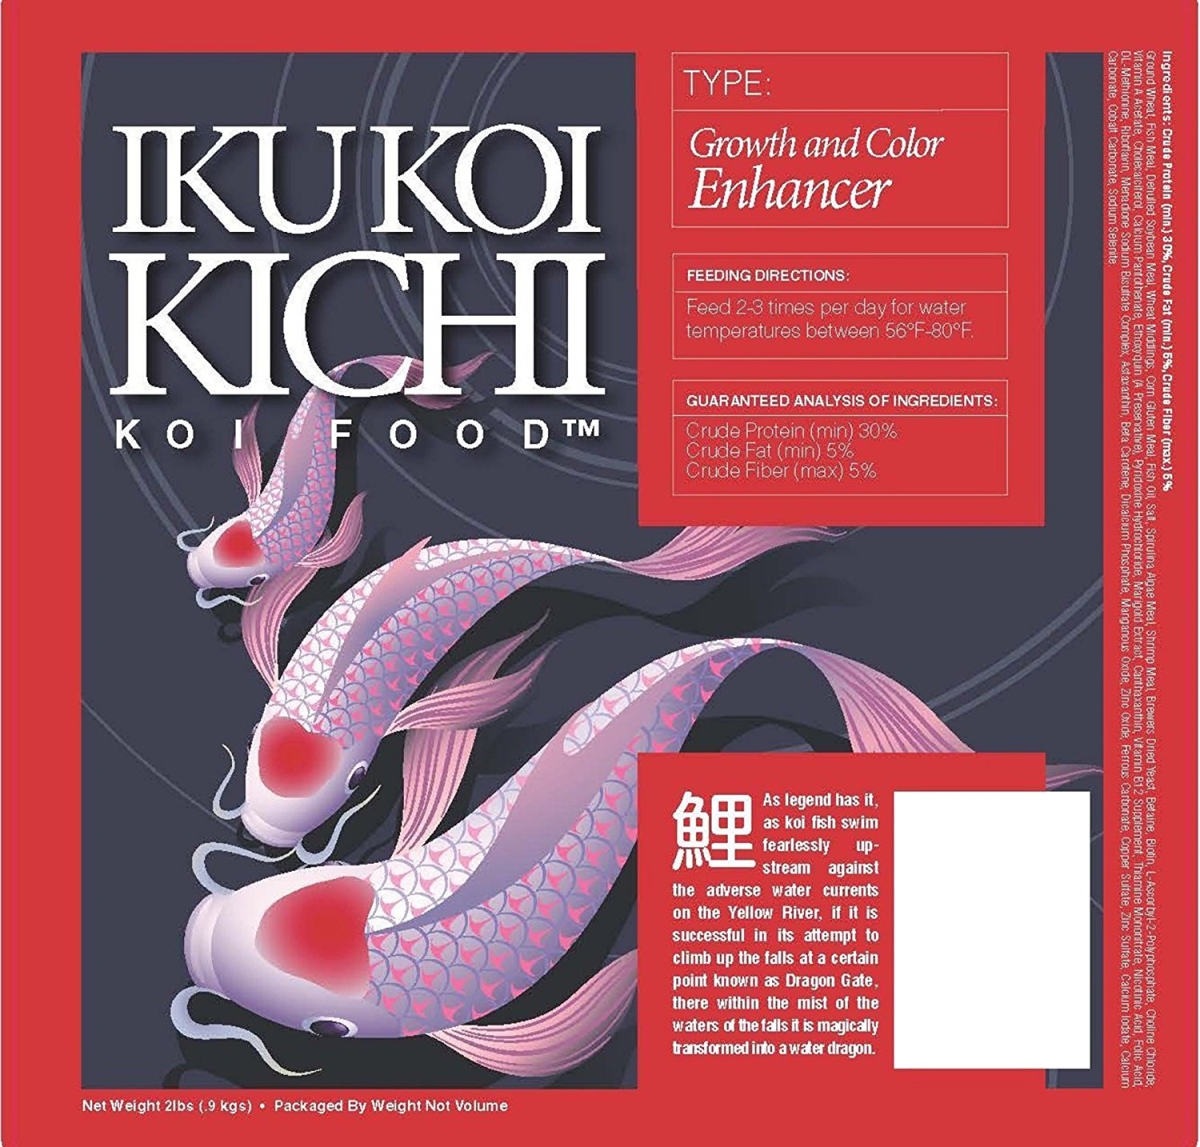 Picture of Iku Koi Kichi KKFA40 40 lbs Color Enhancer Fish Food